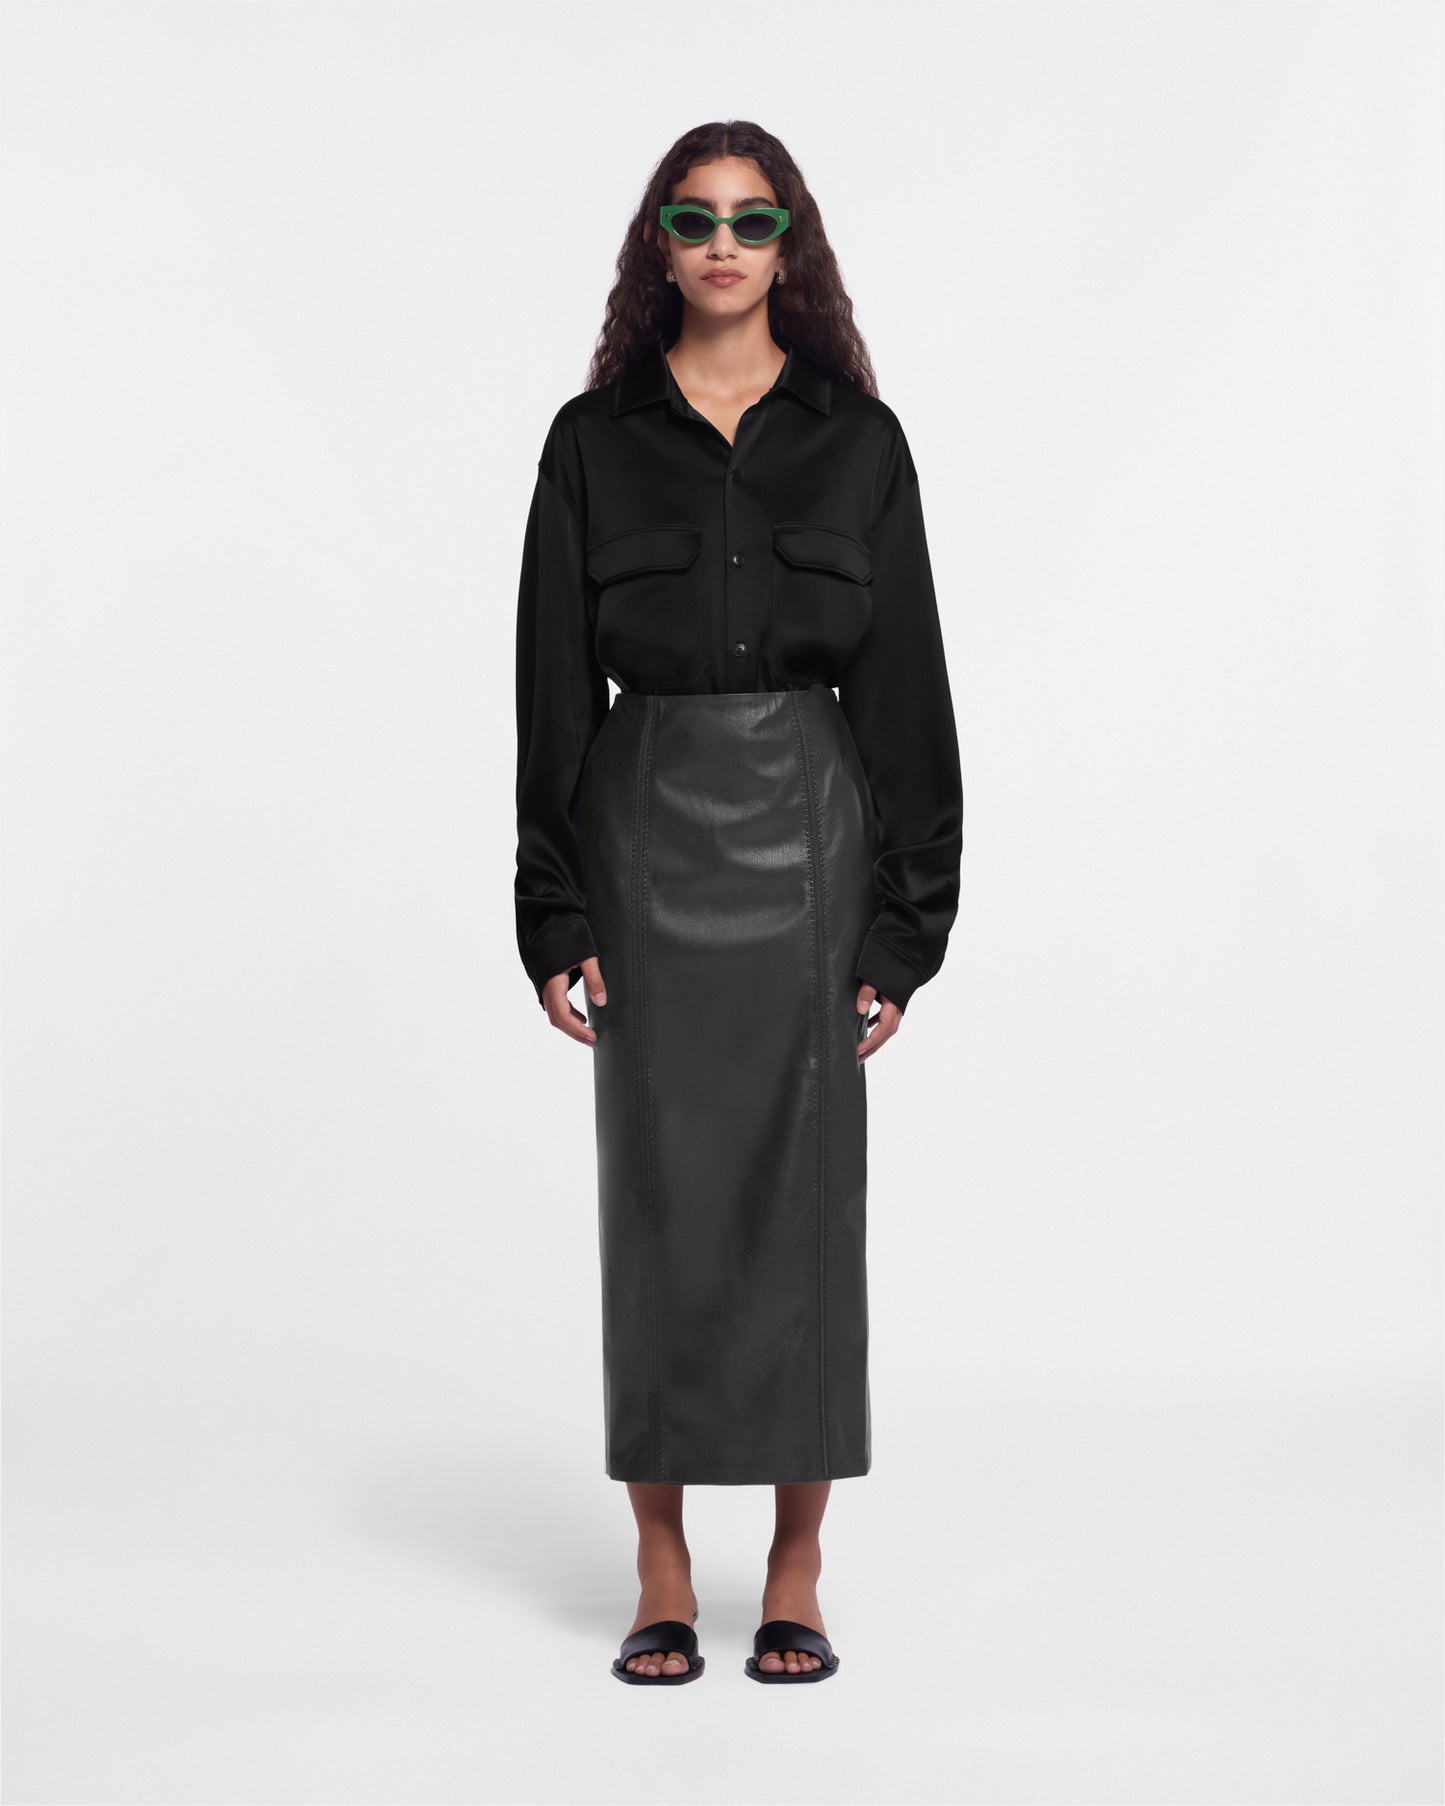 Carissa - Okobor™ Alt-Leather Skirt - Black